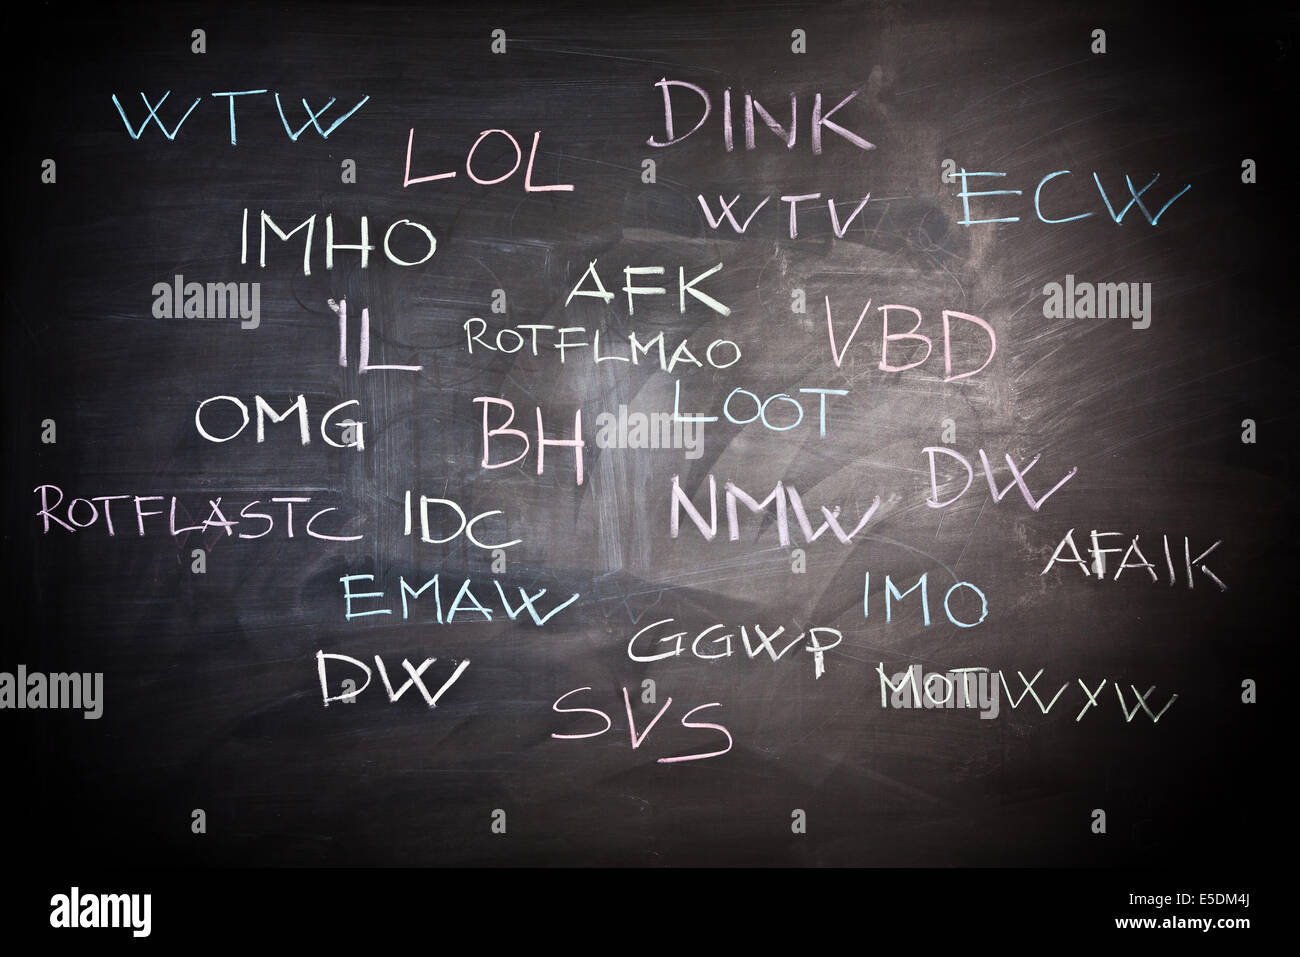 internet slang on classic slate blackboard Stock Photo